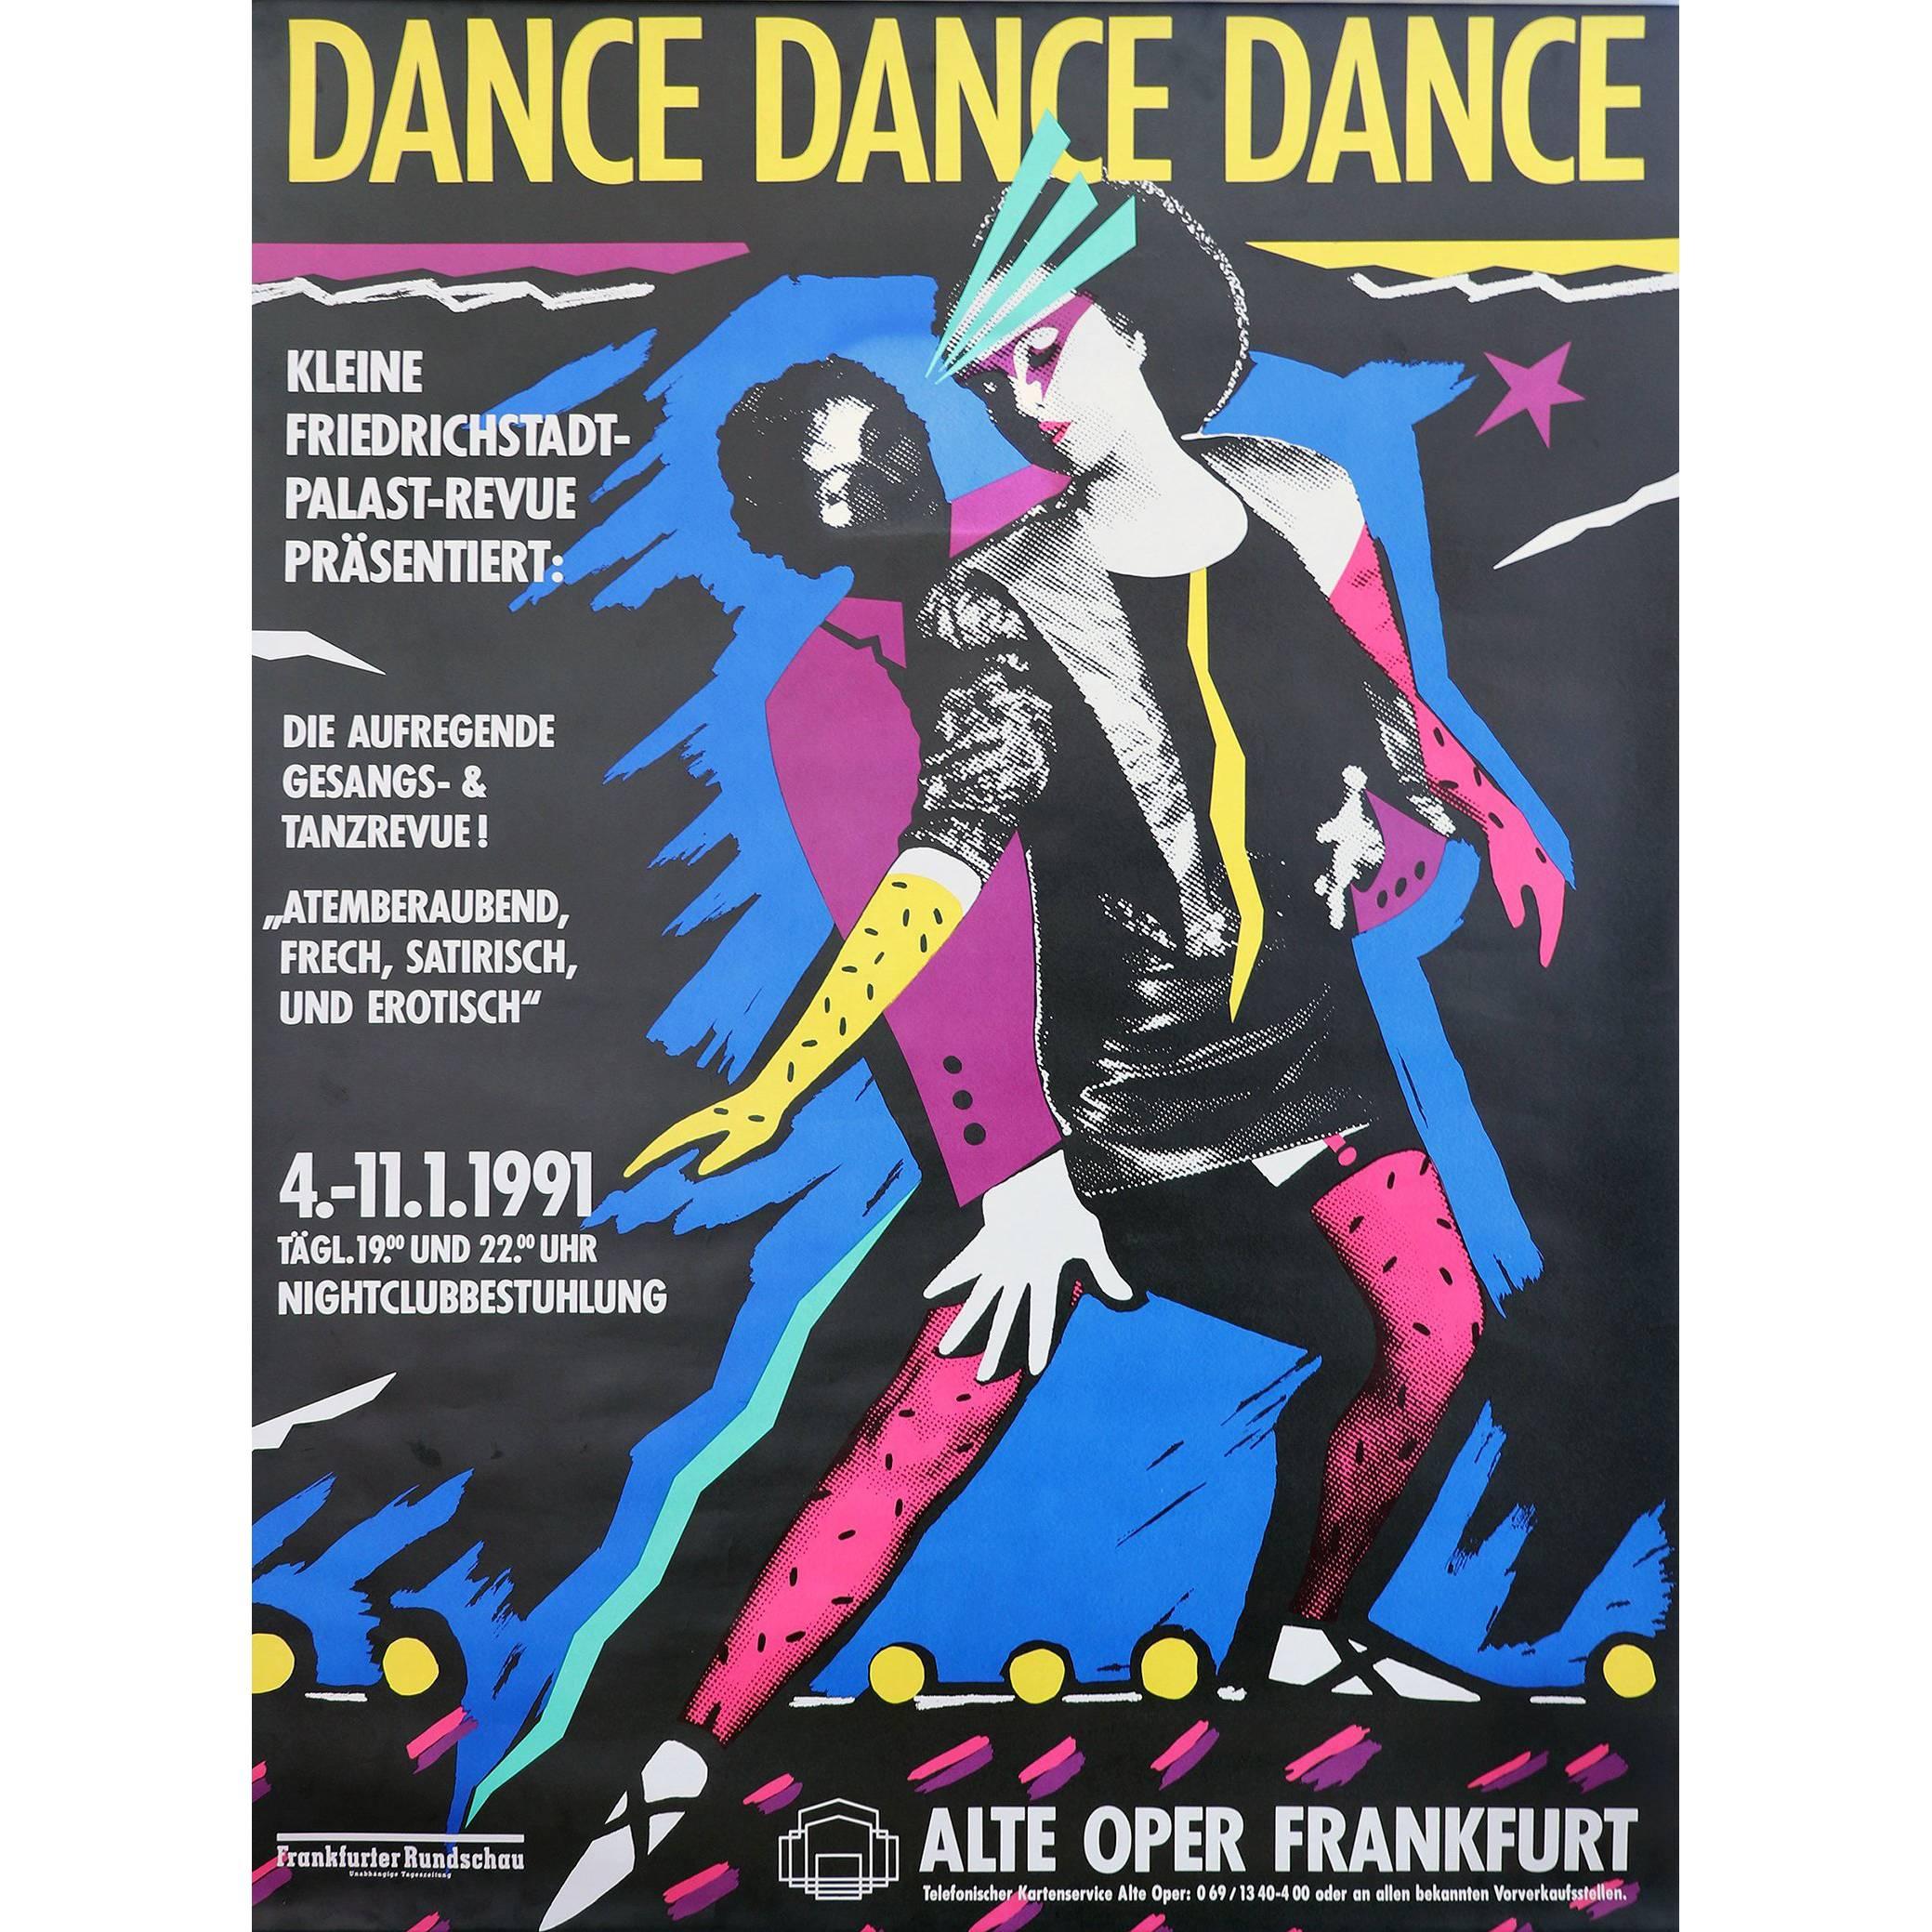 "Dance Dance Dance" German Poster, 1991